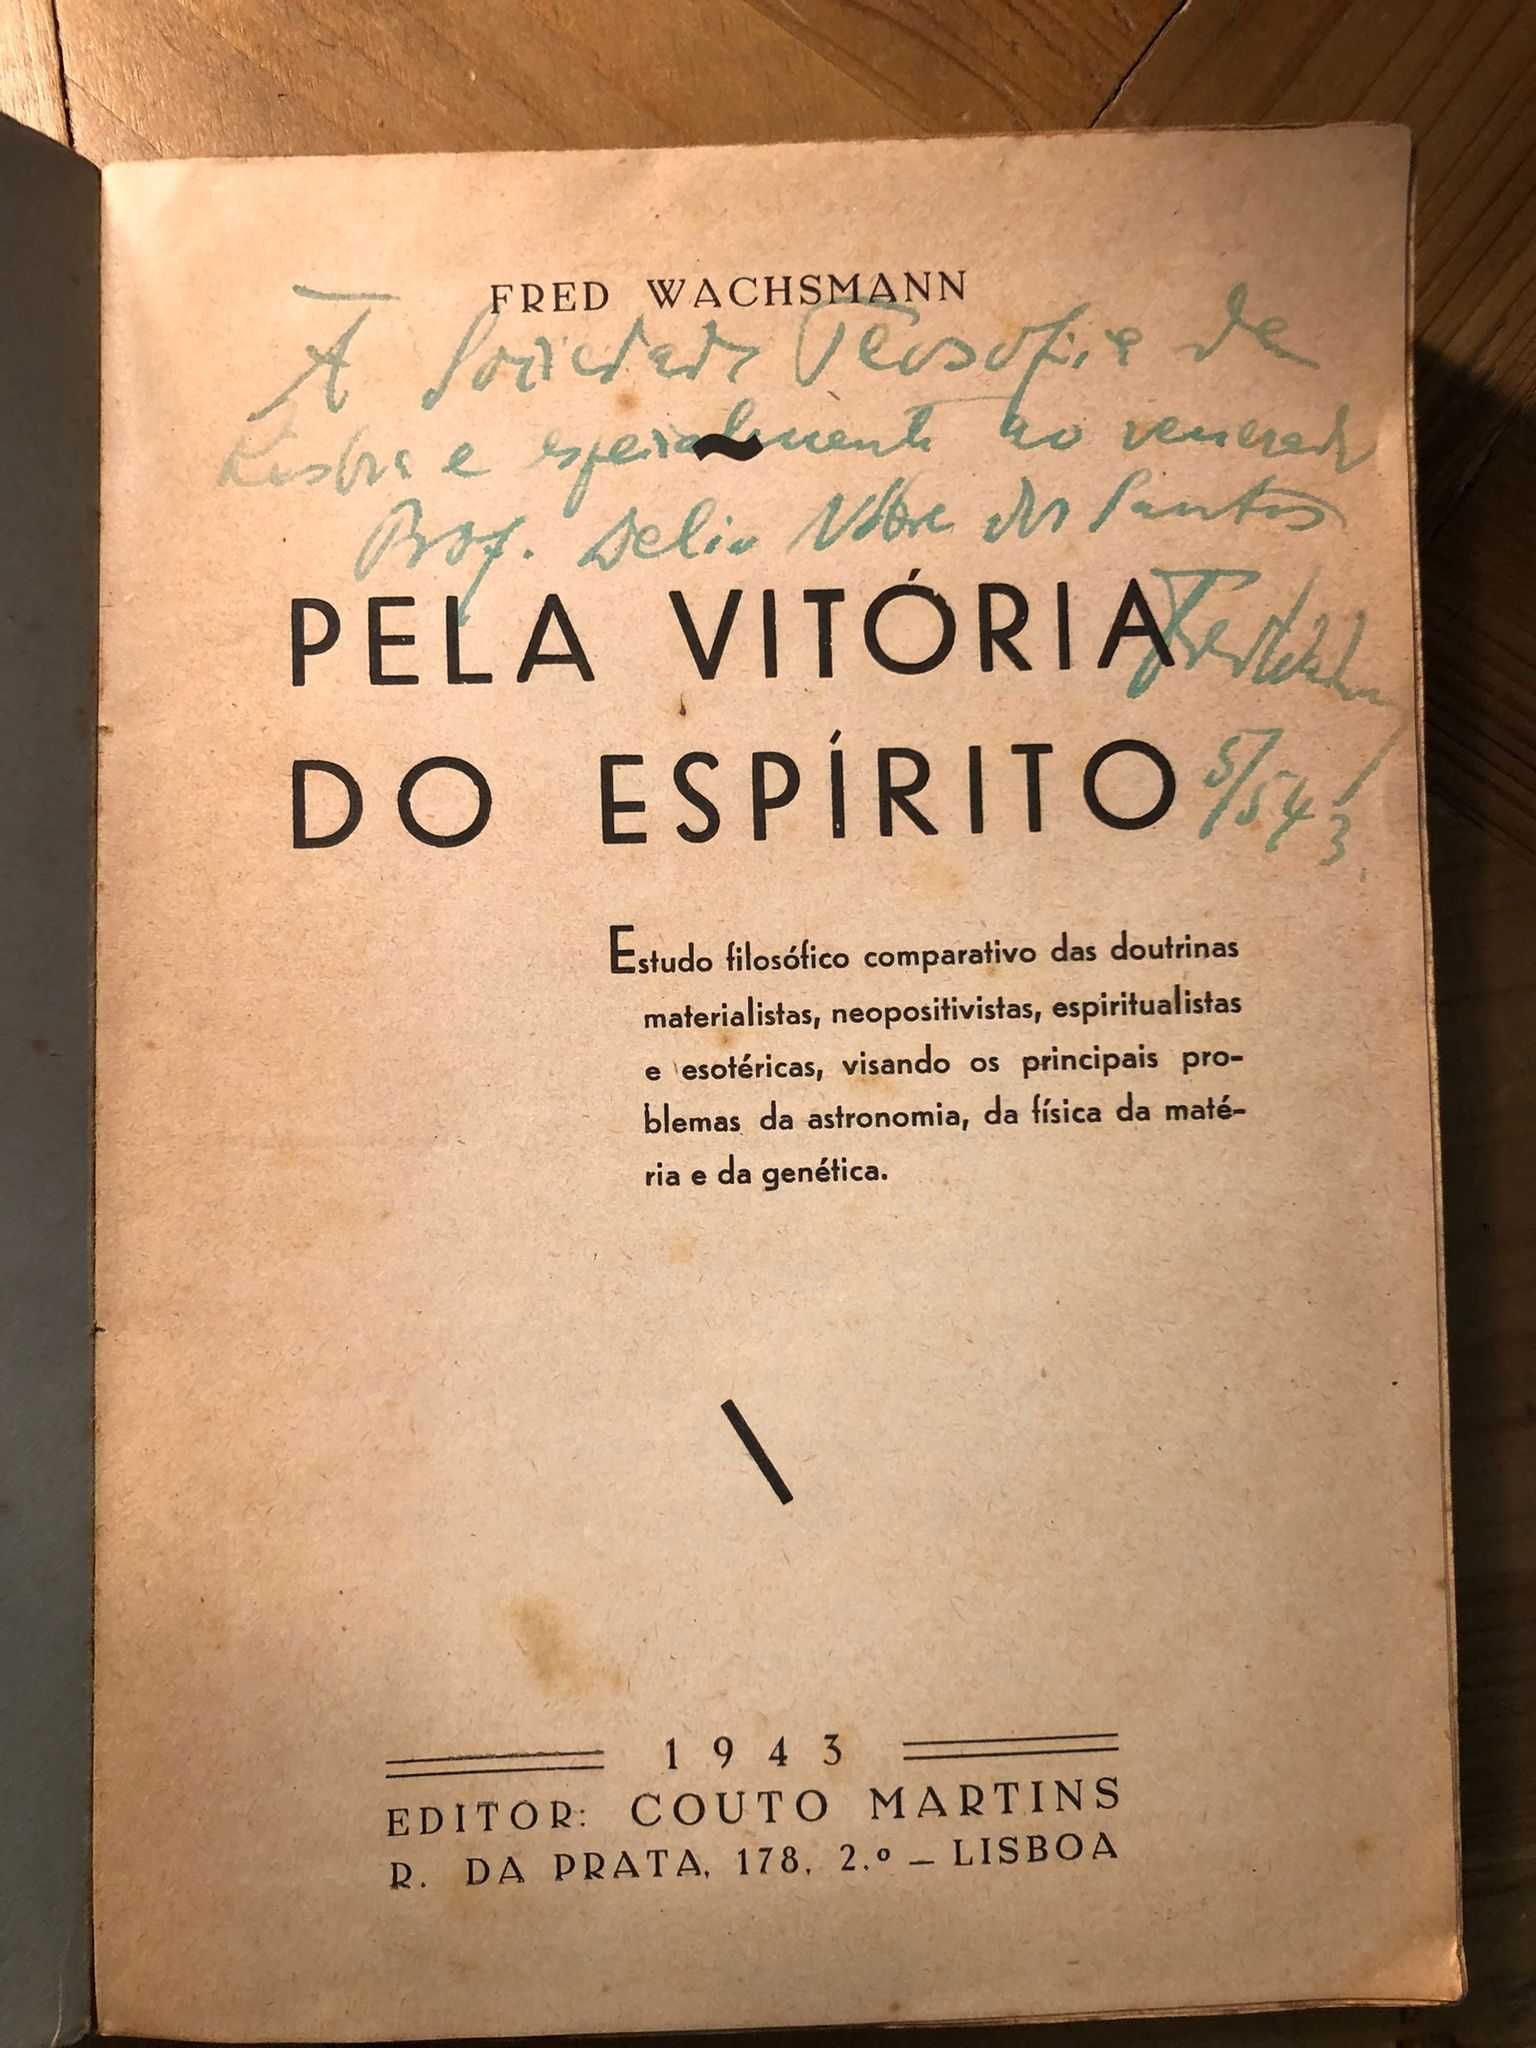 Livro “Pela Vitoria do Espírito” por Fred Wachsmann – 1943